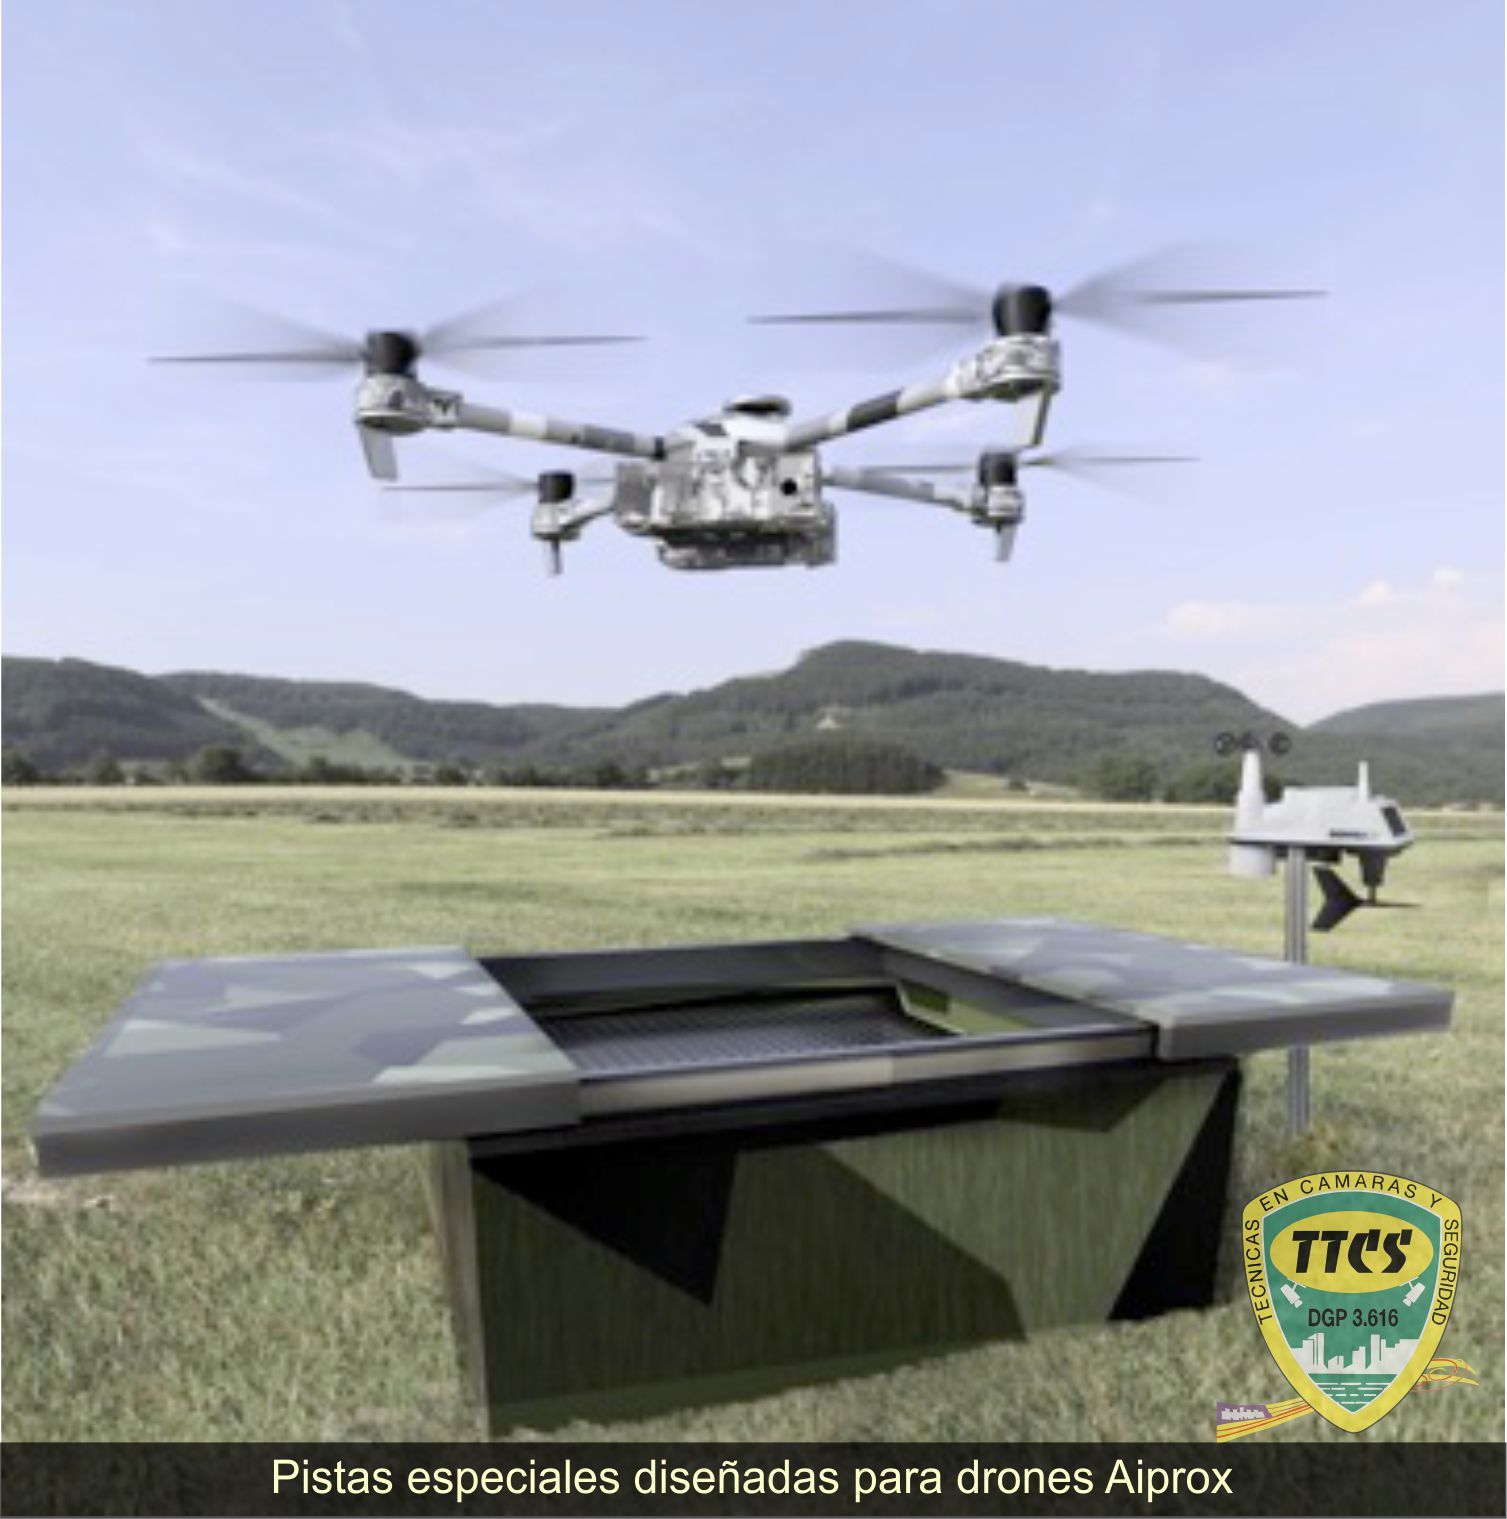 Airprox drone Casmar